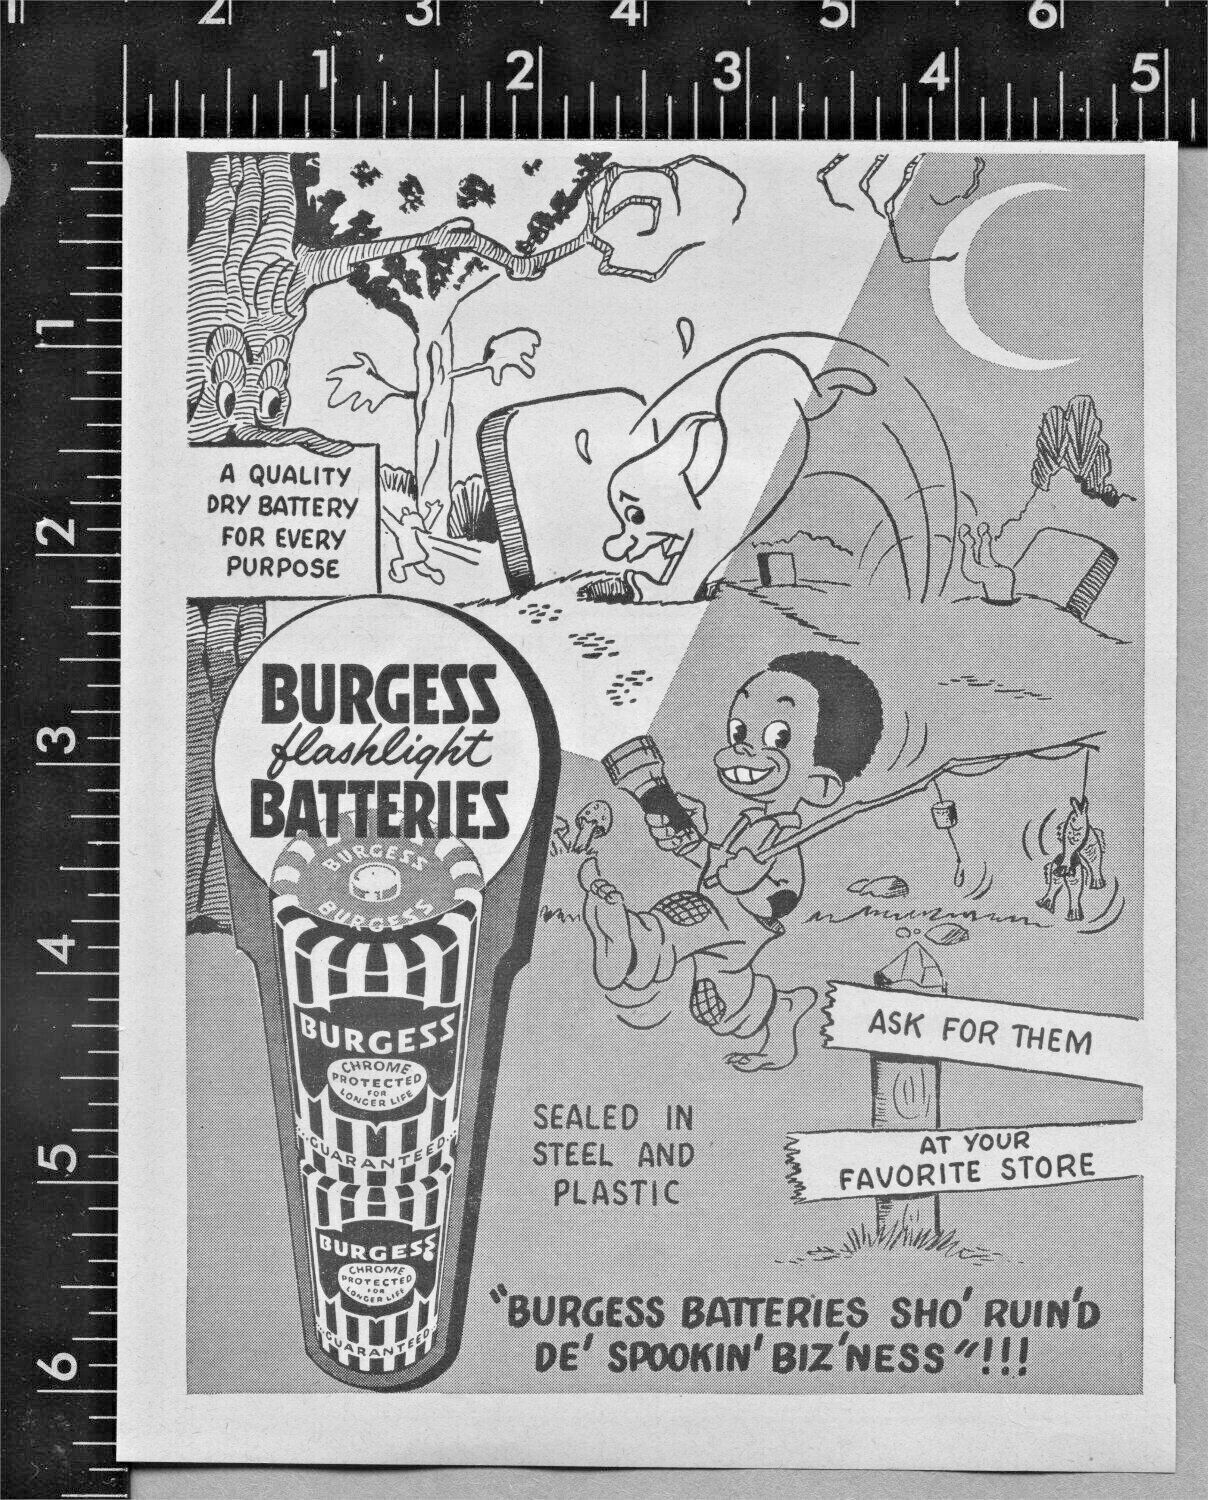 Vintage 1954 Magazine Print Ad for Burgess Batteries